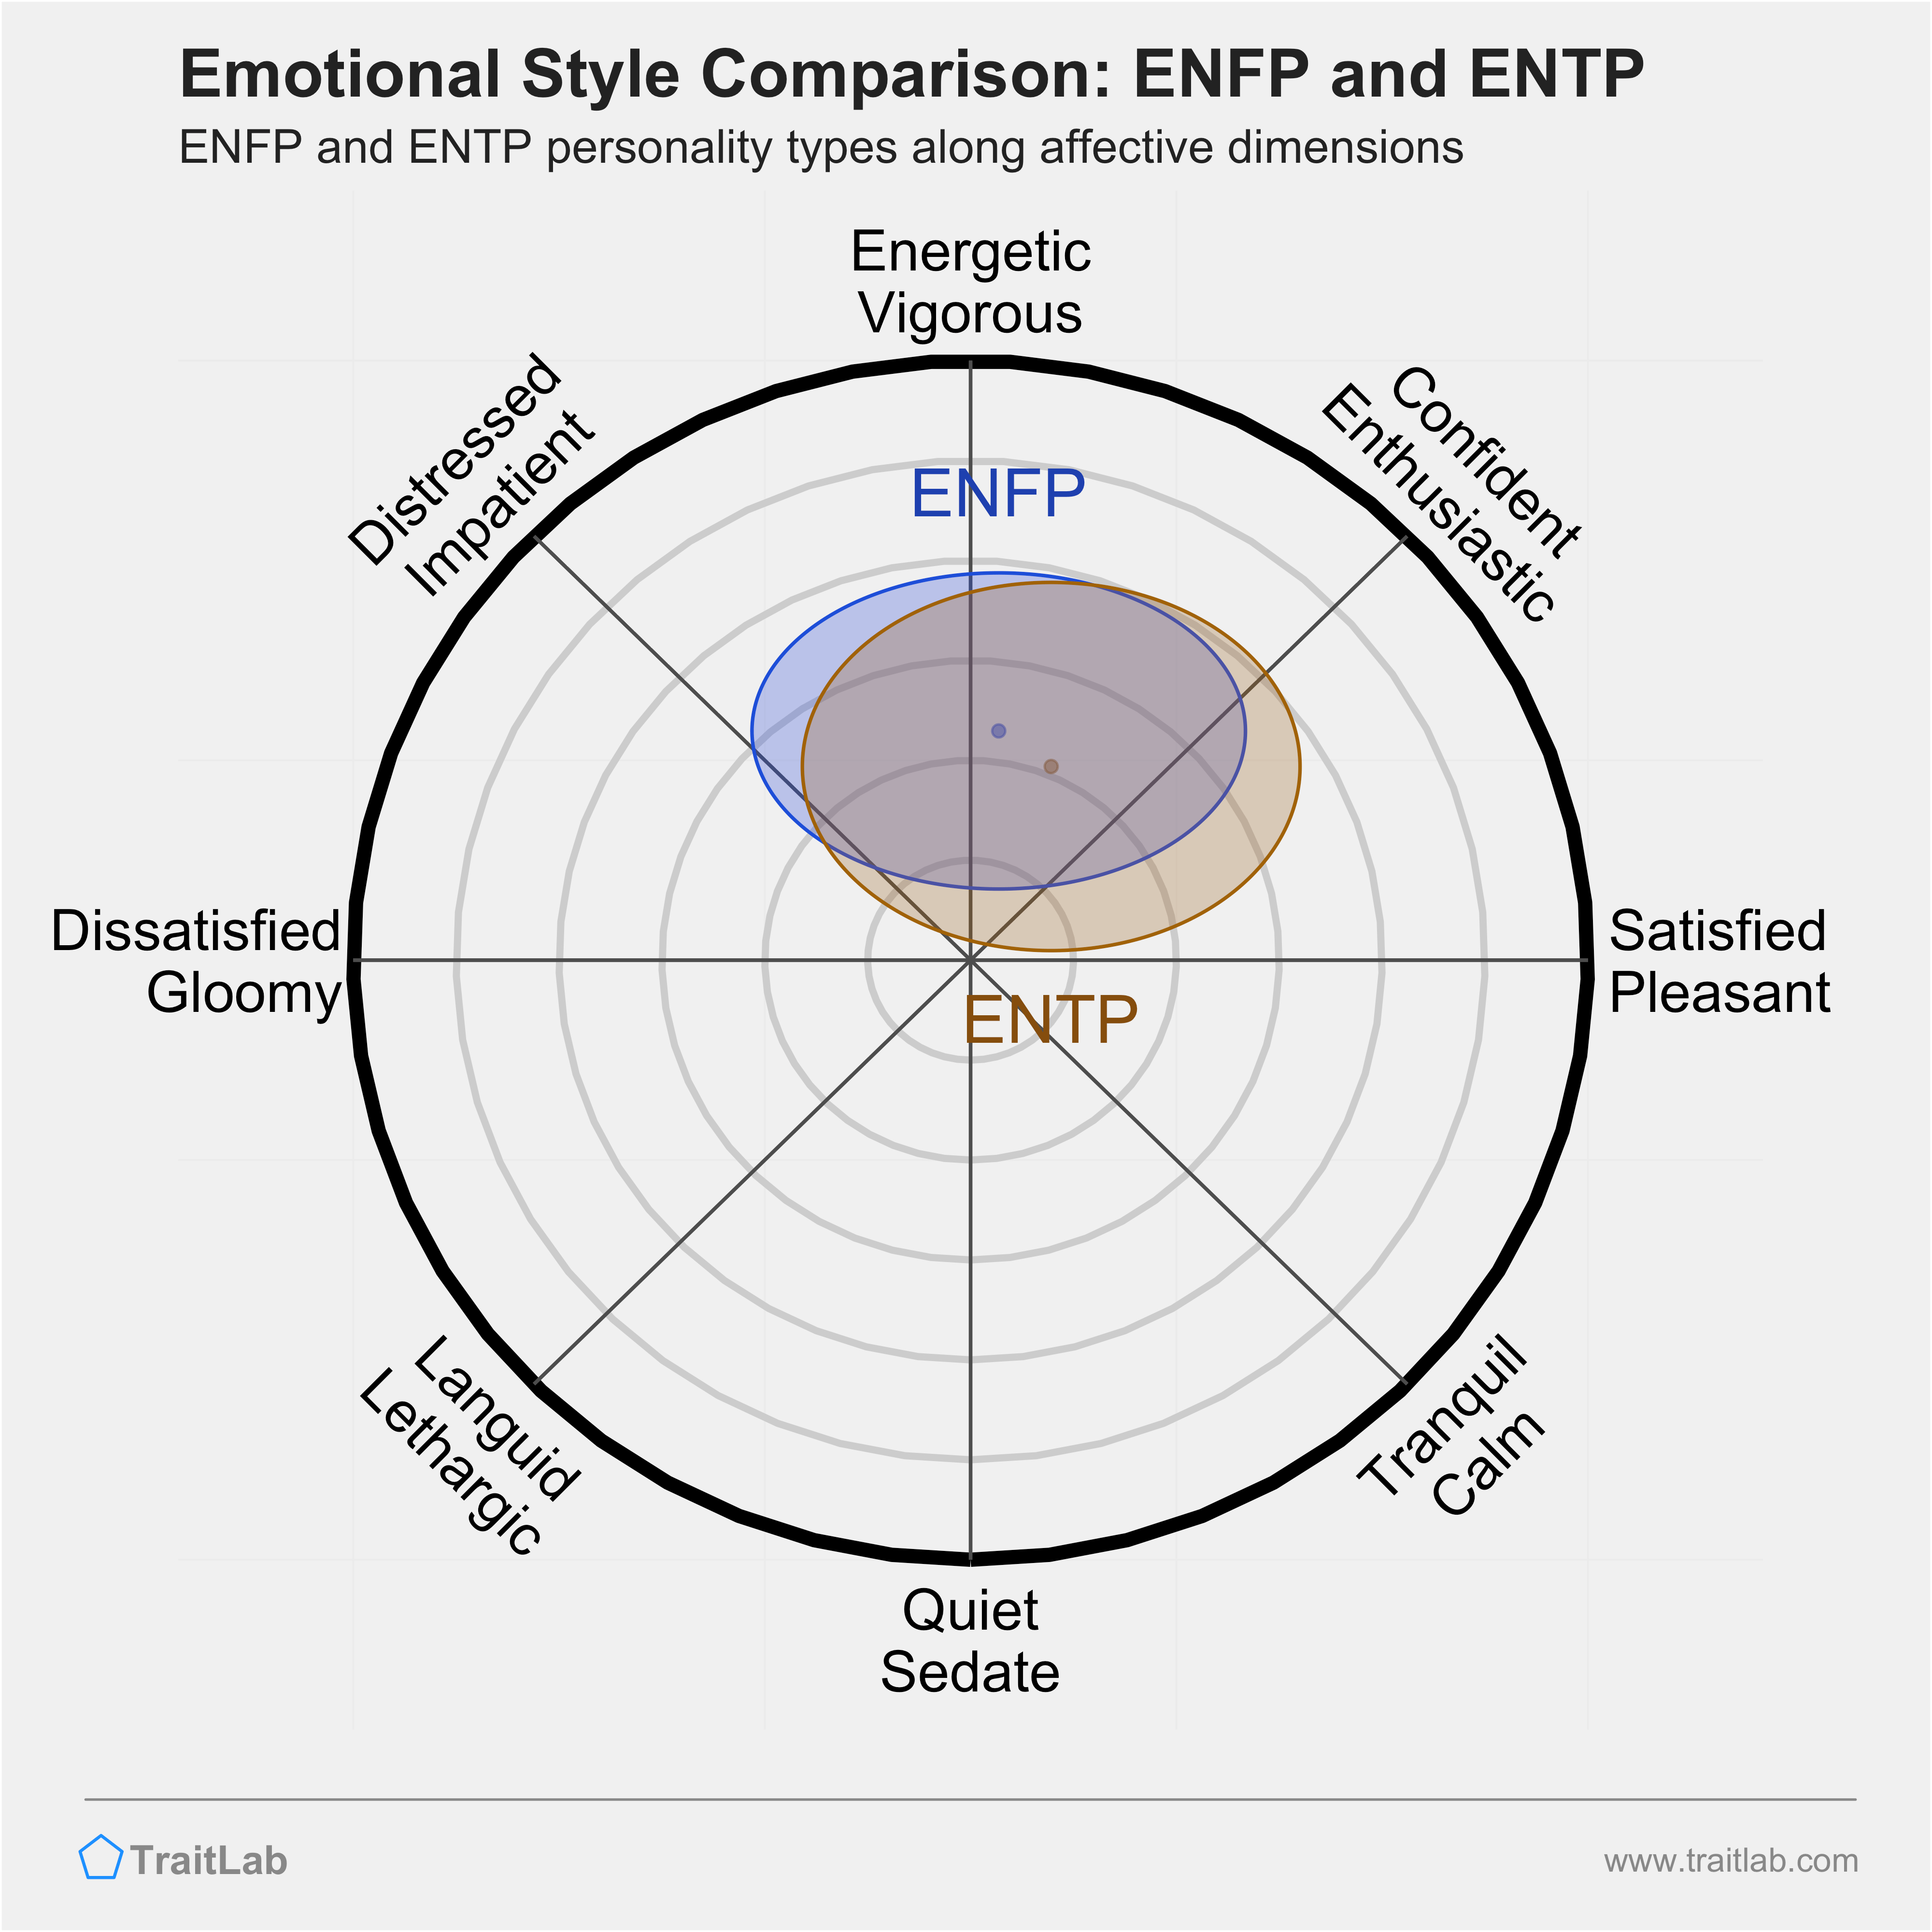 ENFP and ENTP comparison across emotional (affective) dimensions